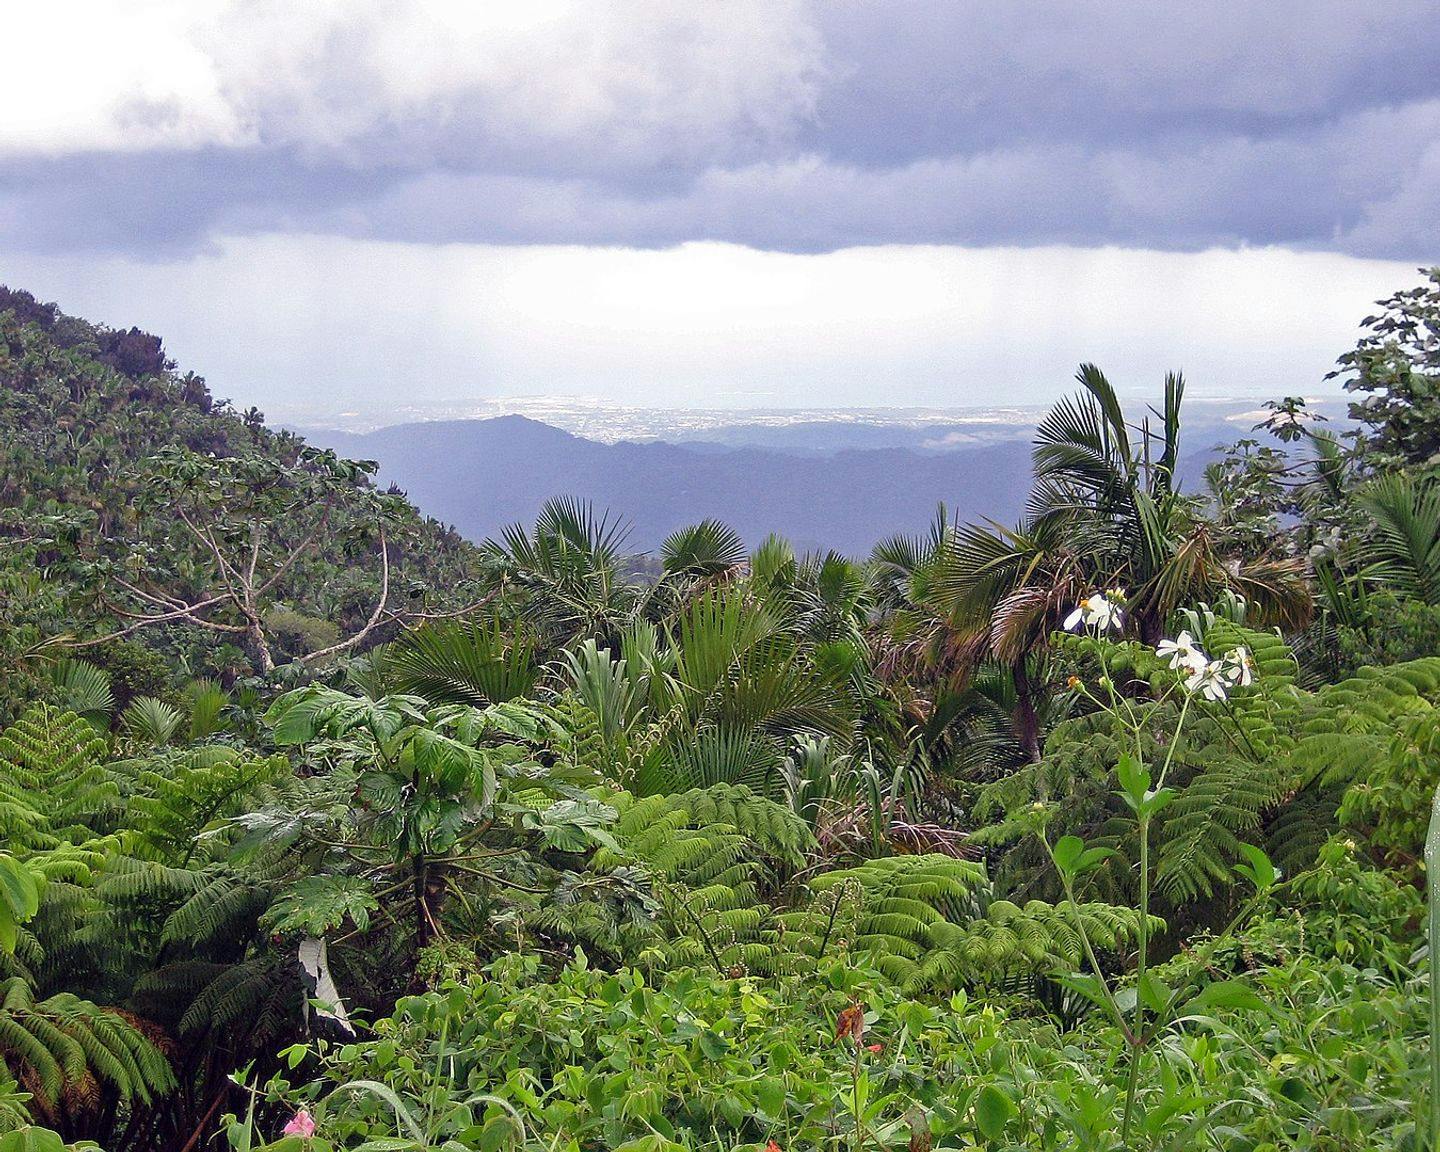 Rainforest. Photo: Quendo / Wikimedia commons